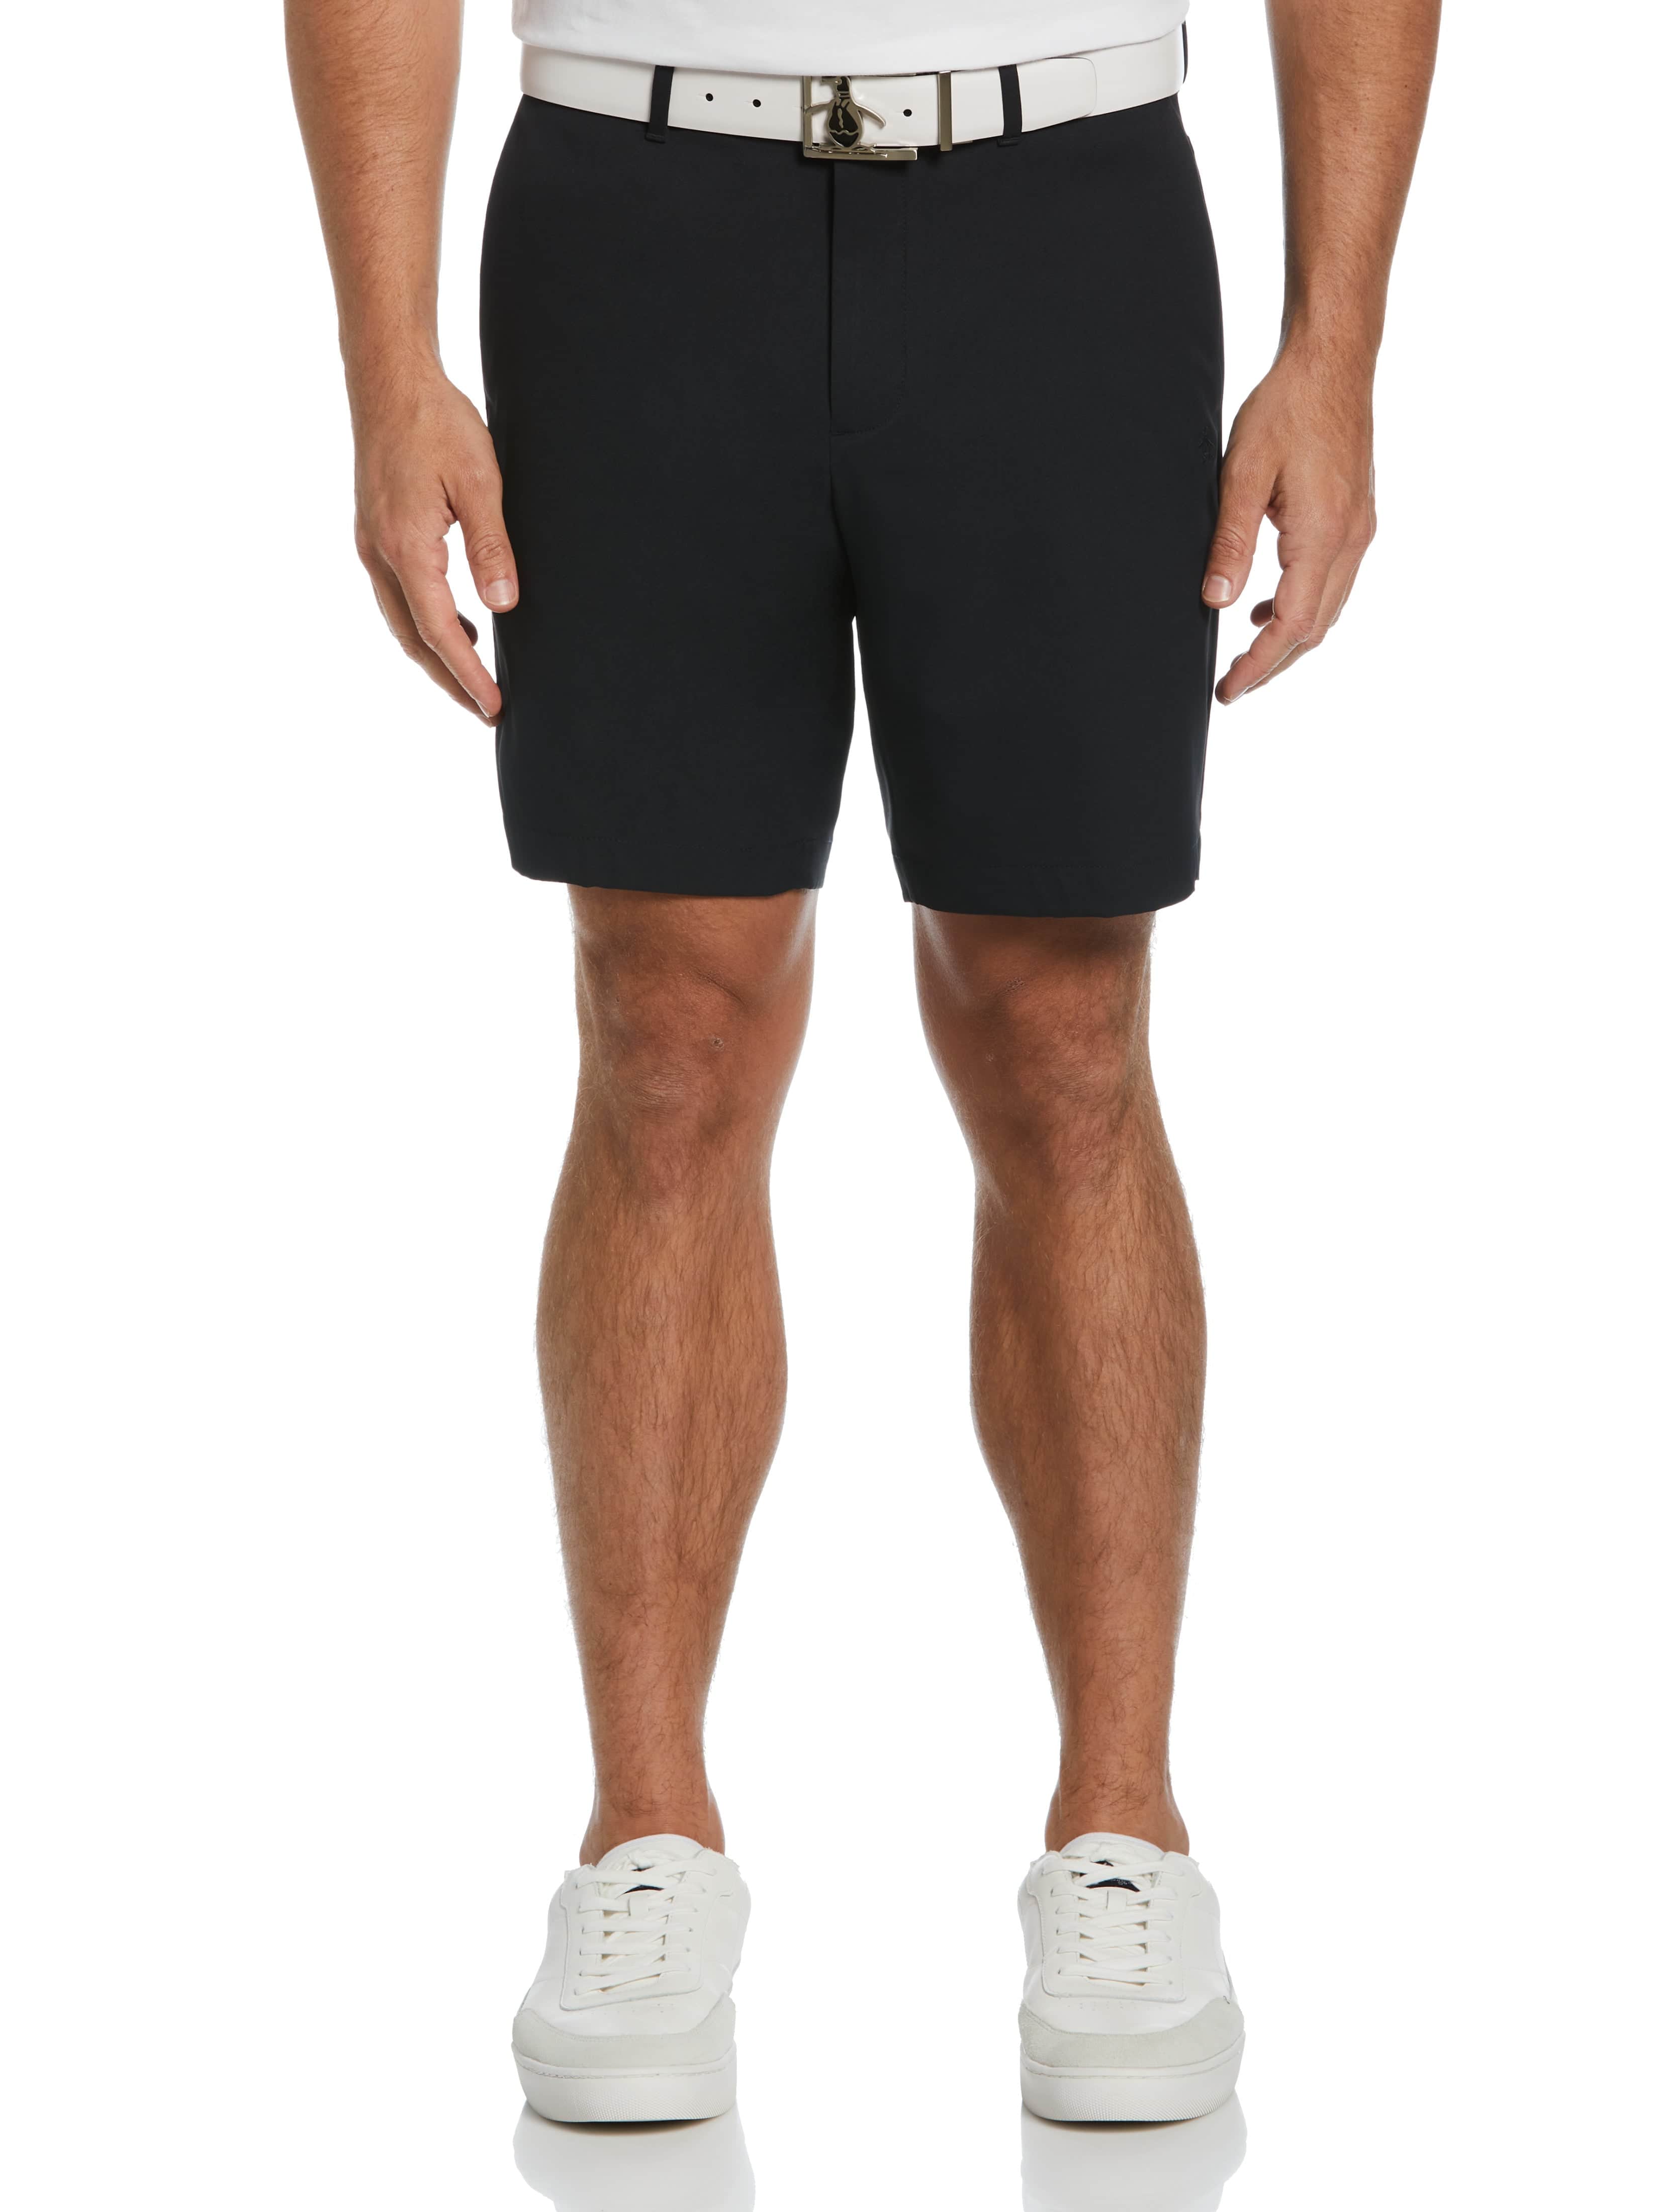 Original Penguin Mens Front Golf Solid Flat Shorts, Size 30, Black, 100% Polyester | Golf Apparel Shop